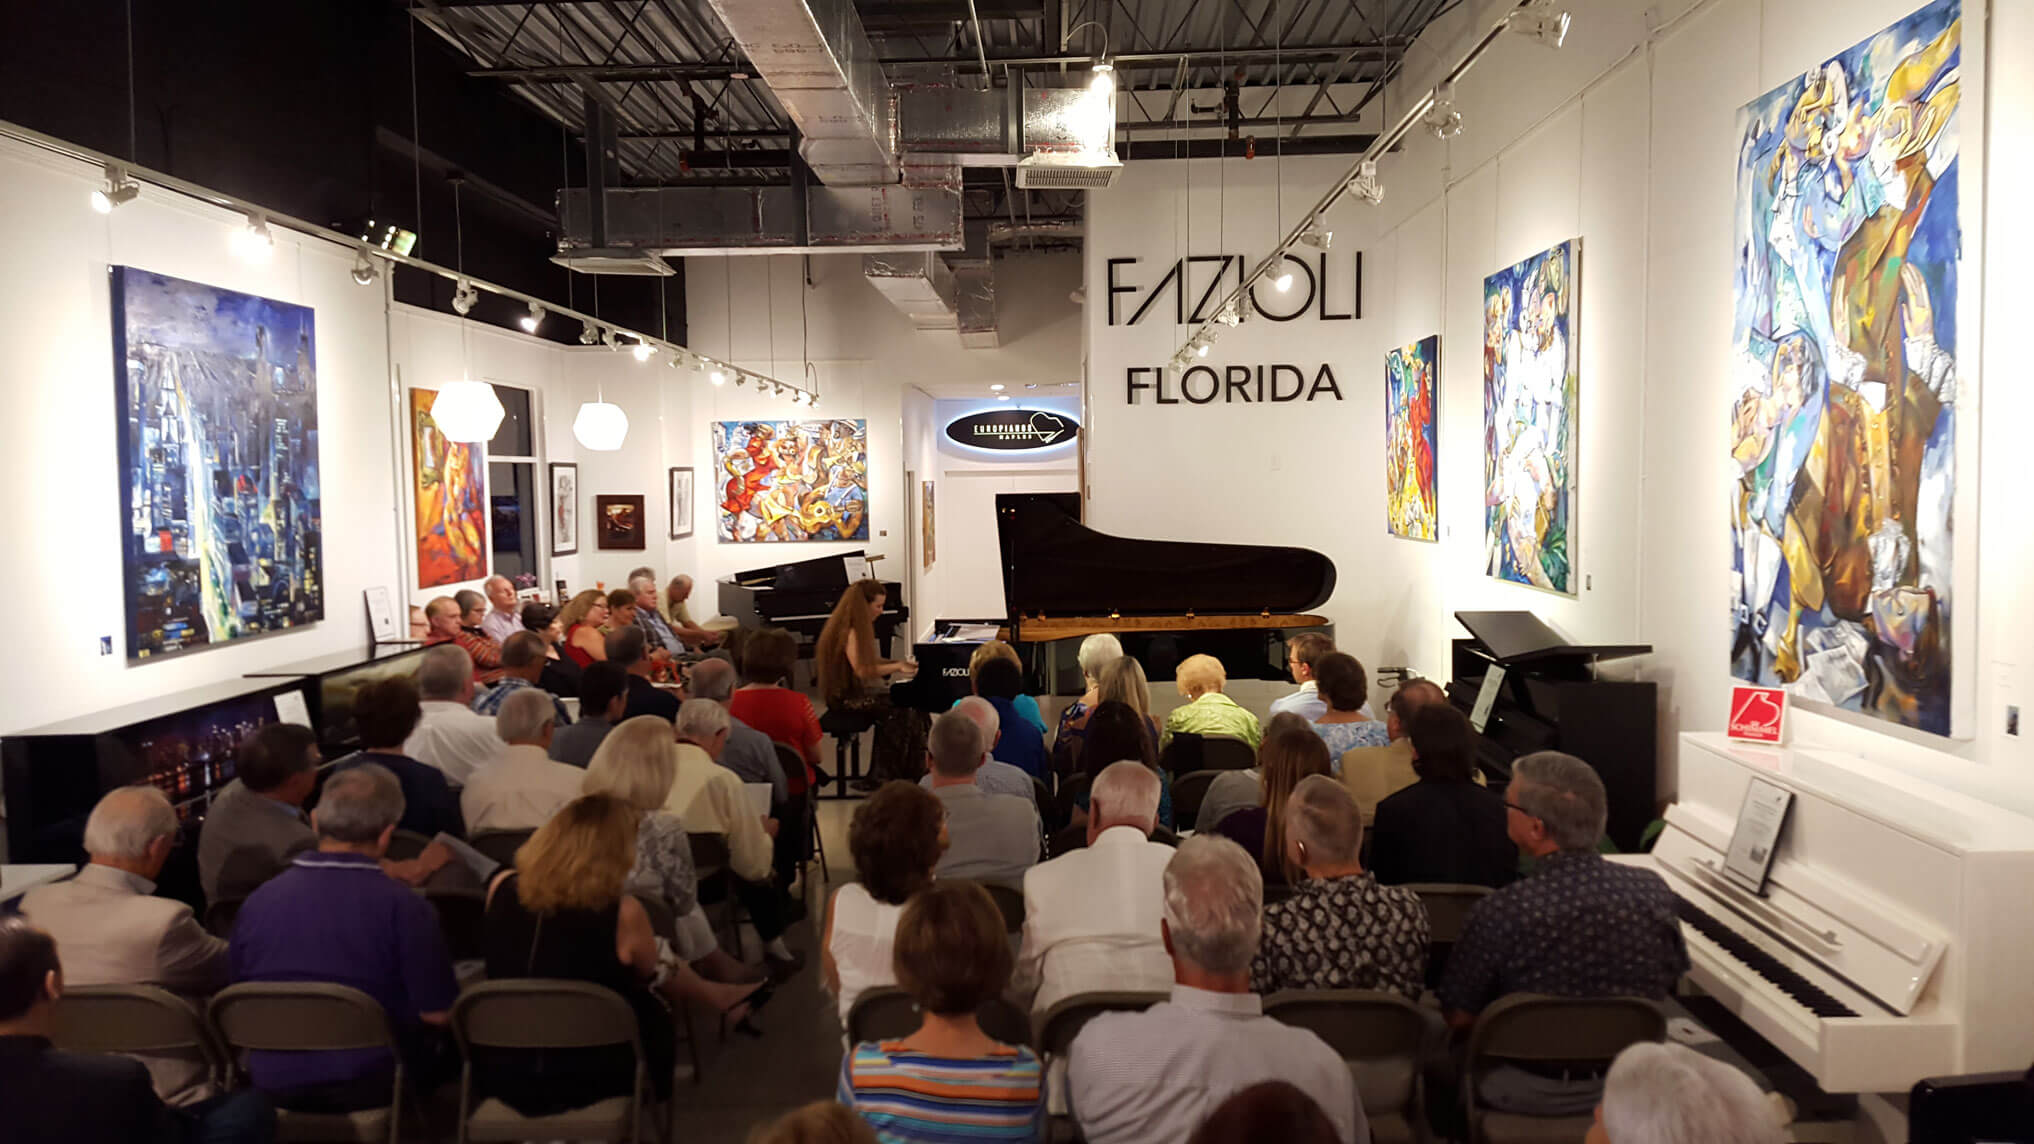 The Ten – Foot Fazioli Meets The Grand Piano Series Of Naples, Florida